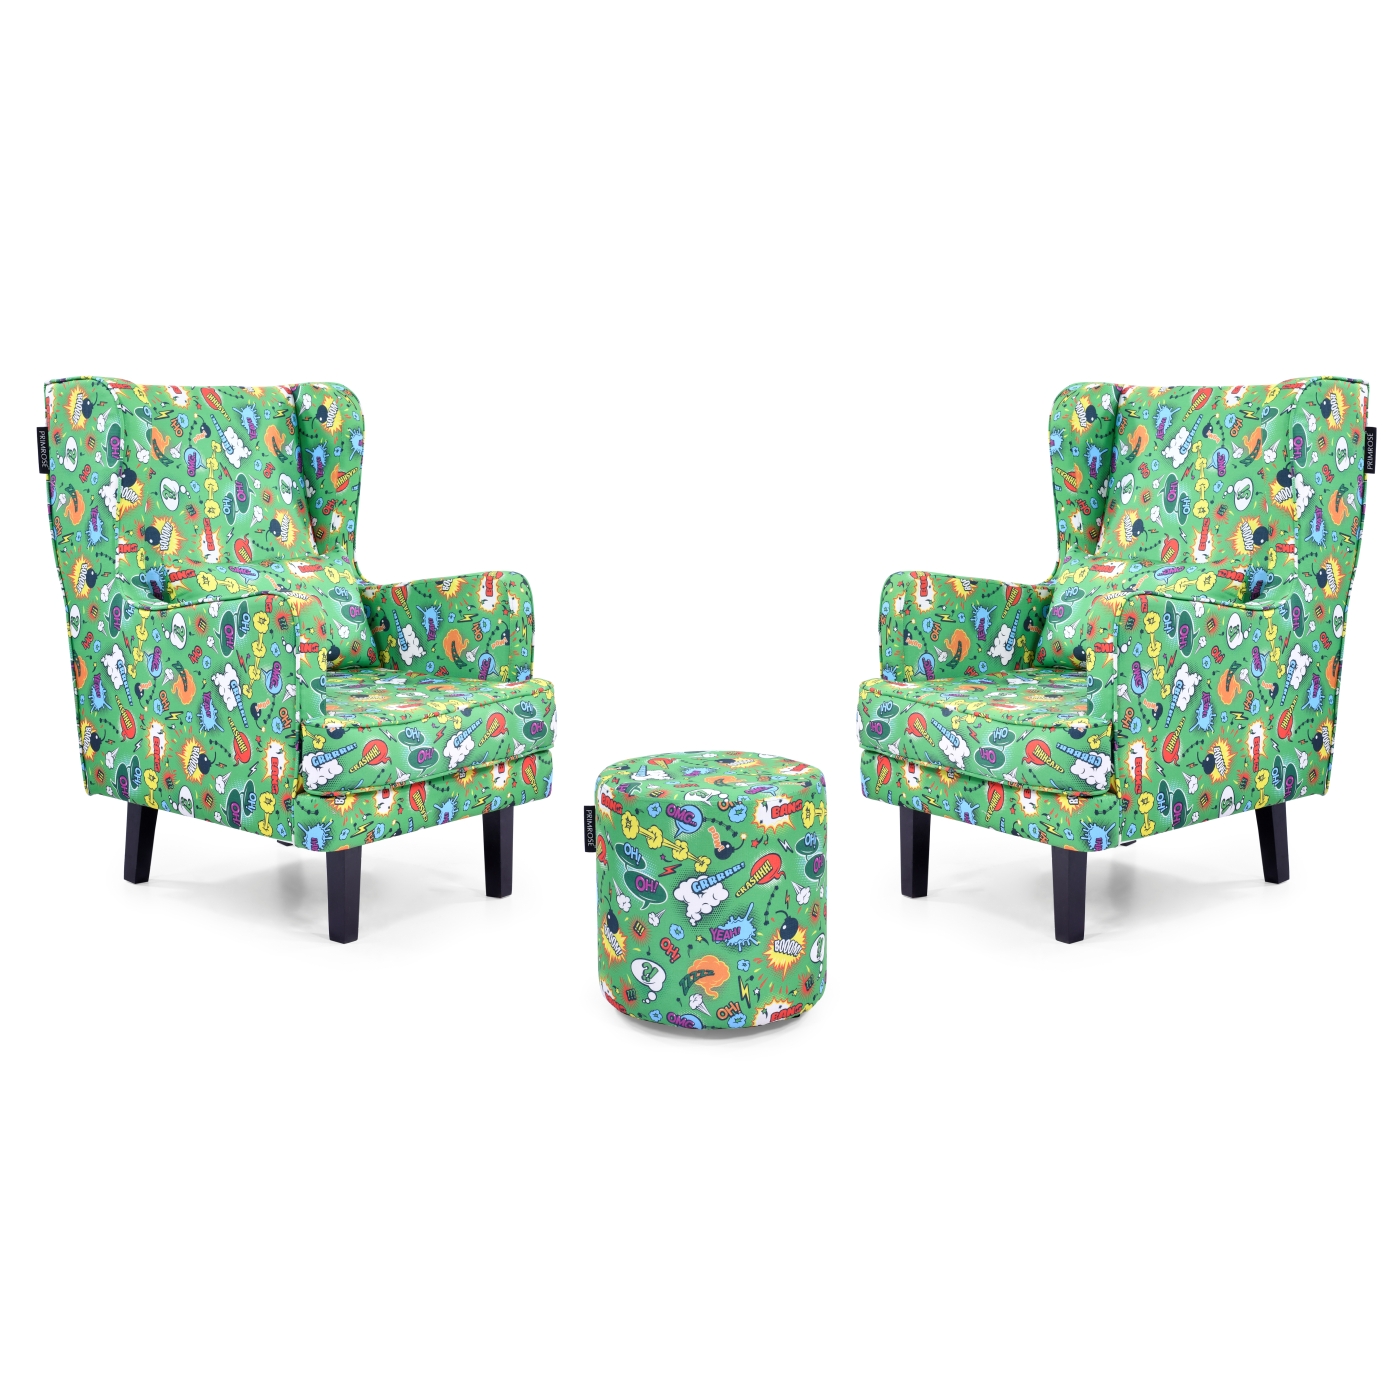 PRIMROSE Comic Boom Digital Printed Faux Linen Fabric High Back Wing Chair Combo (2 Chair+1 Ottoman) - Green  